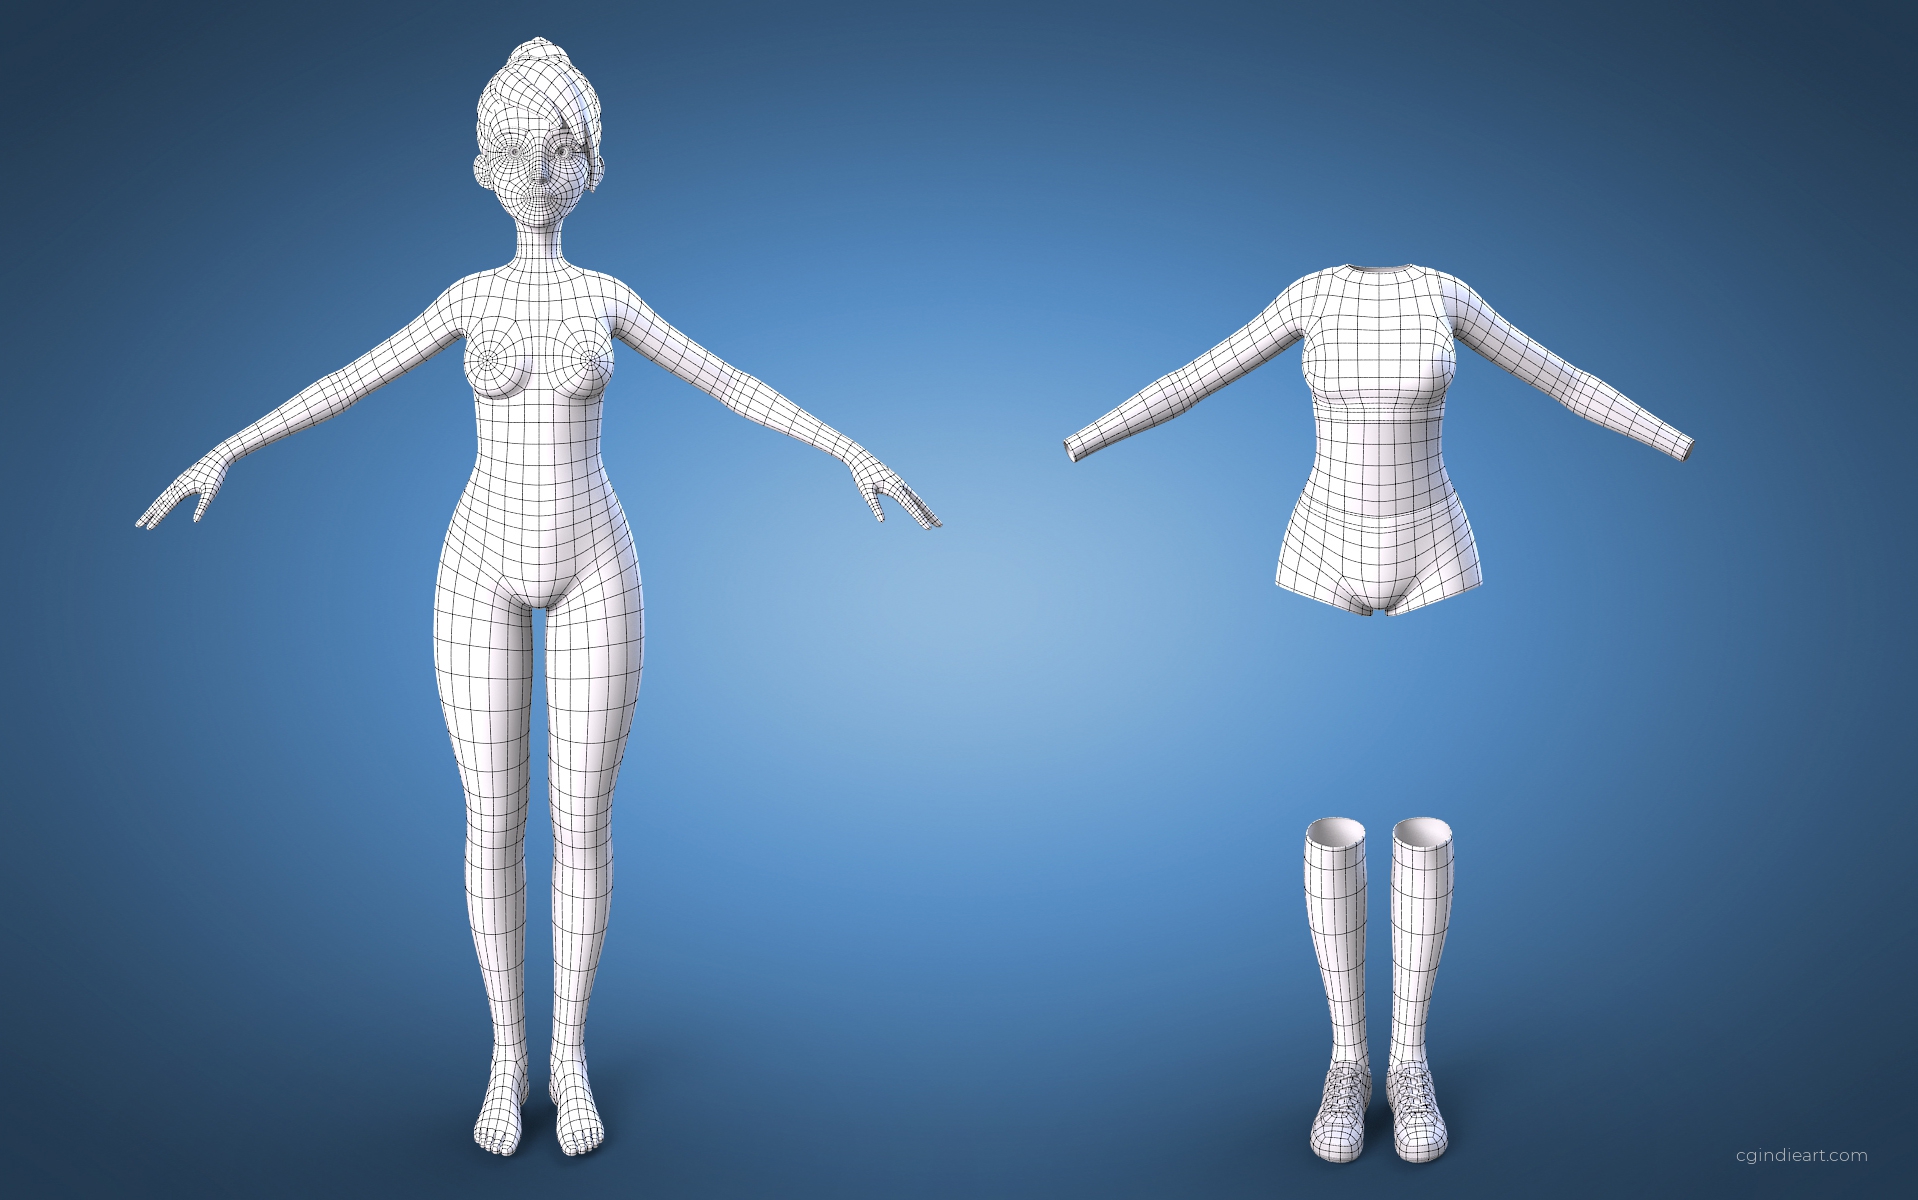 Cartoon sport girl with modular clothing 3d model